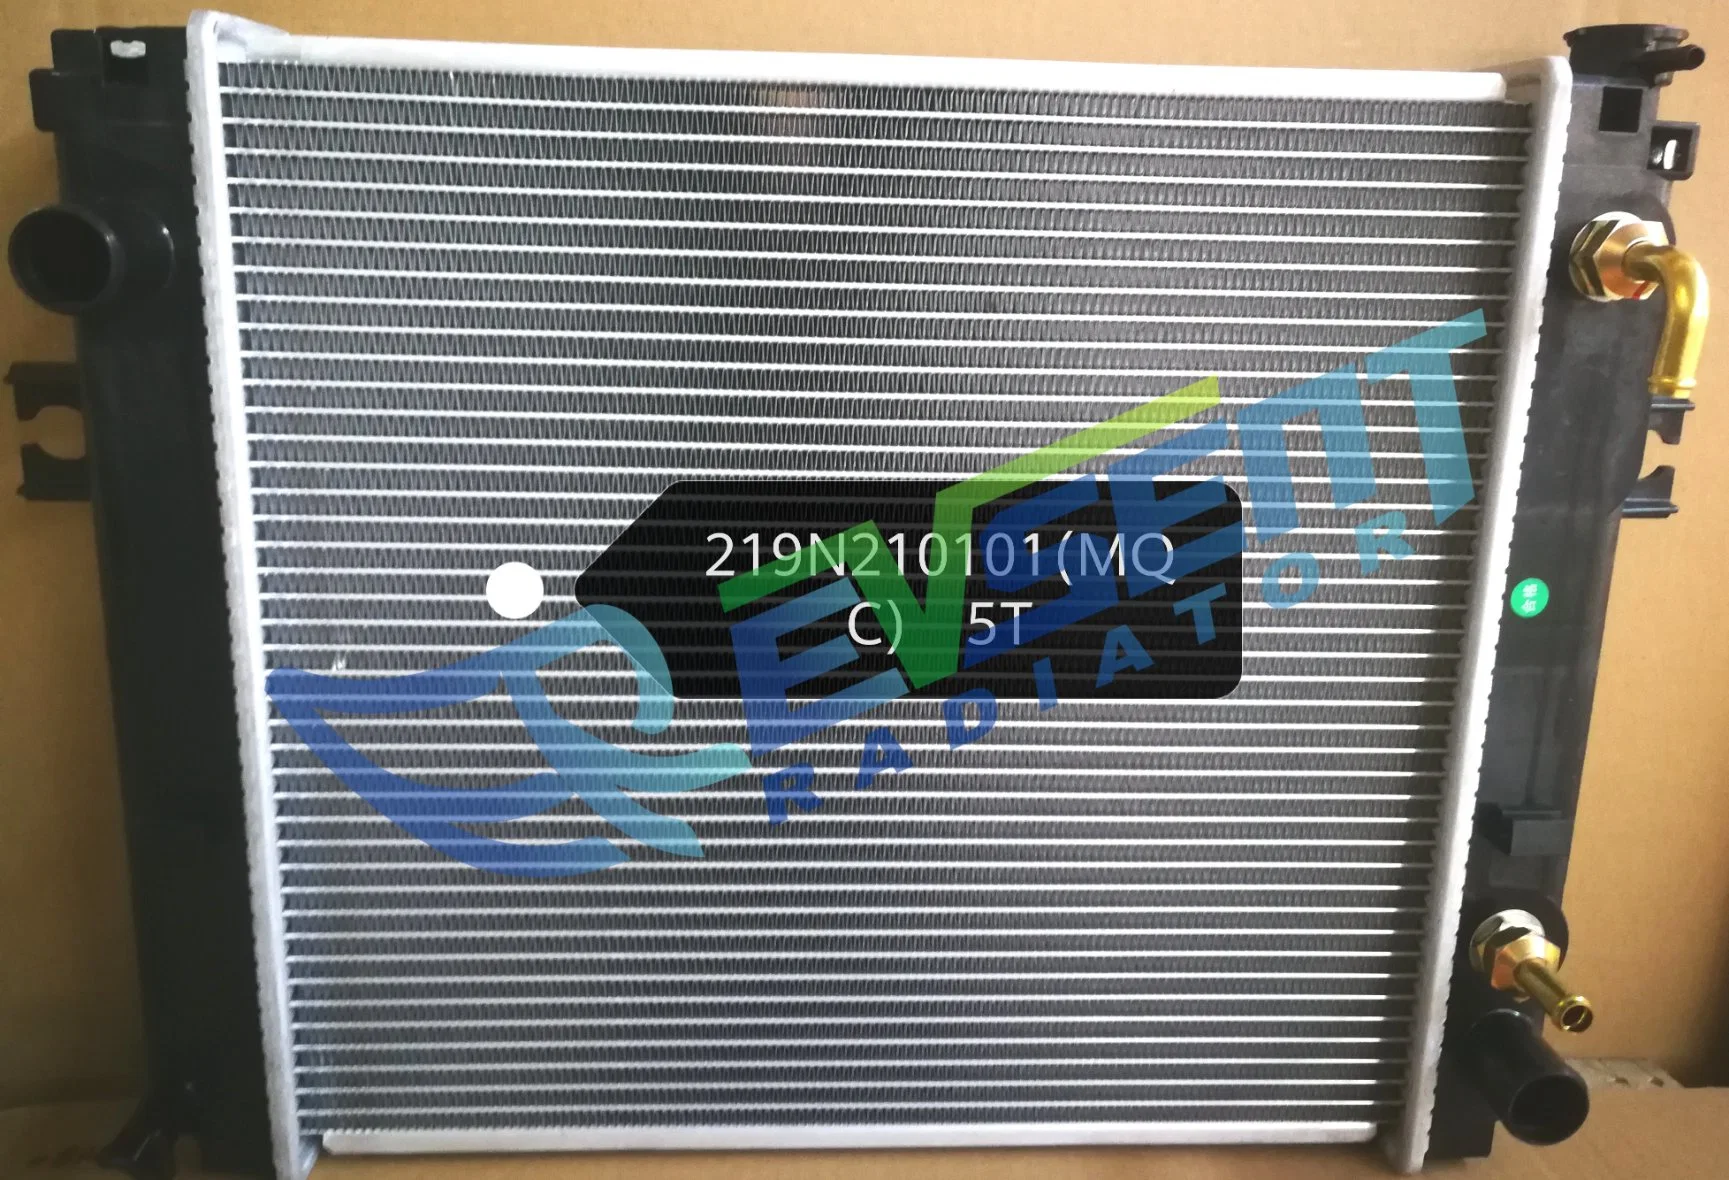 Kühlsystem Gabelstapler-Aluminiumkühler für 219n210101 (MQC) 5t